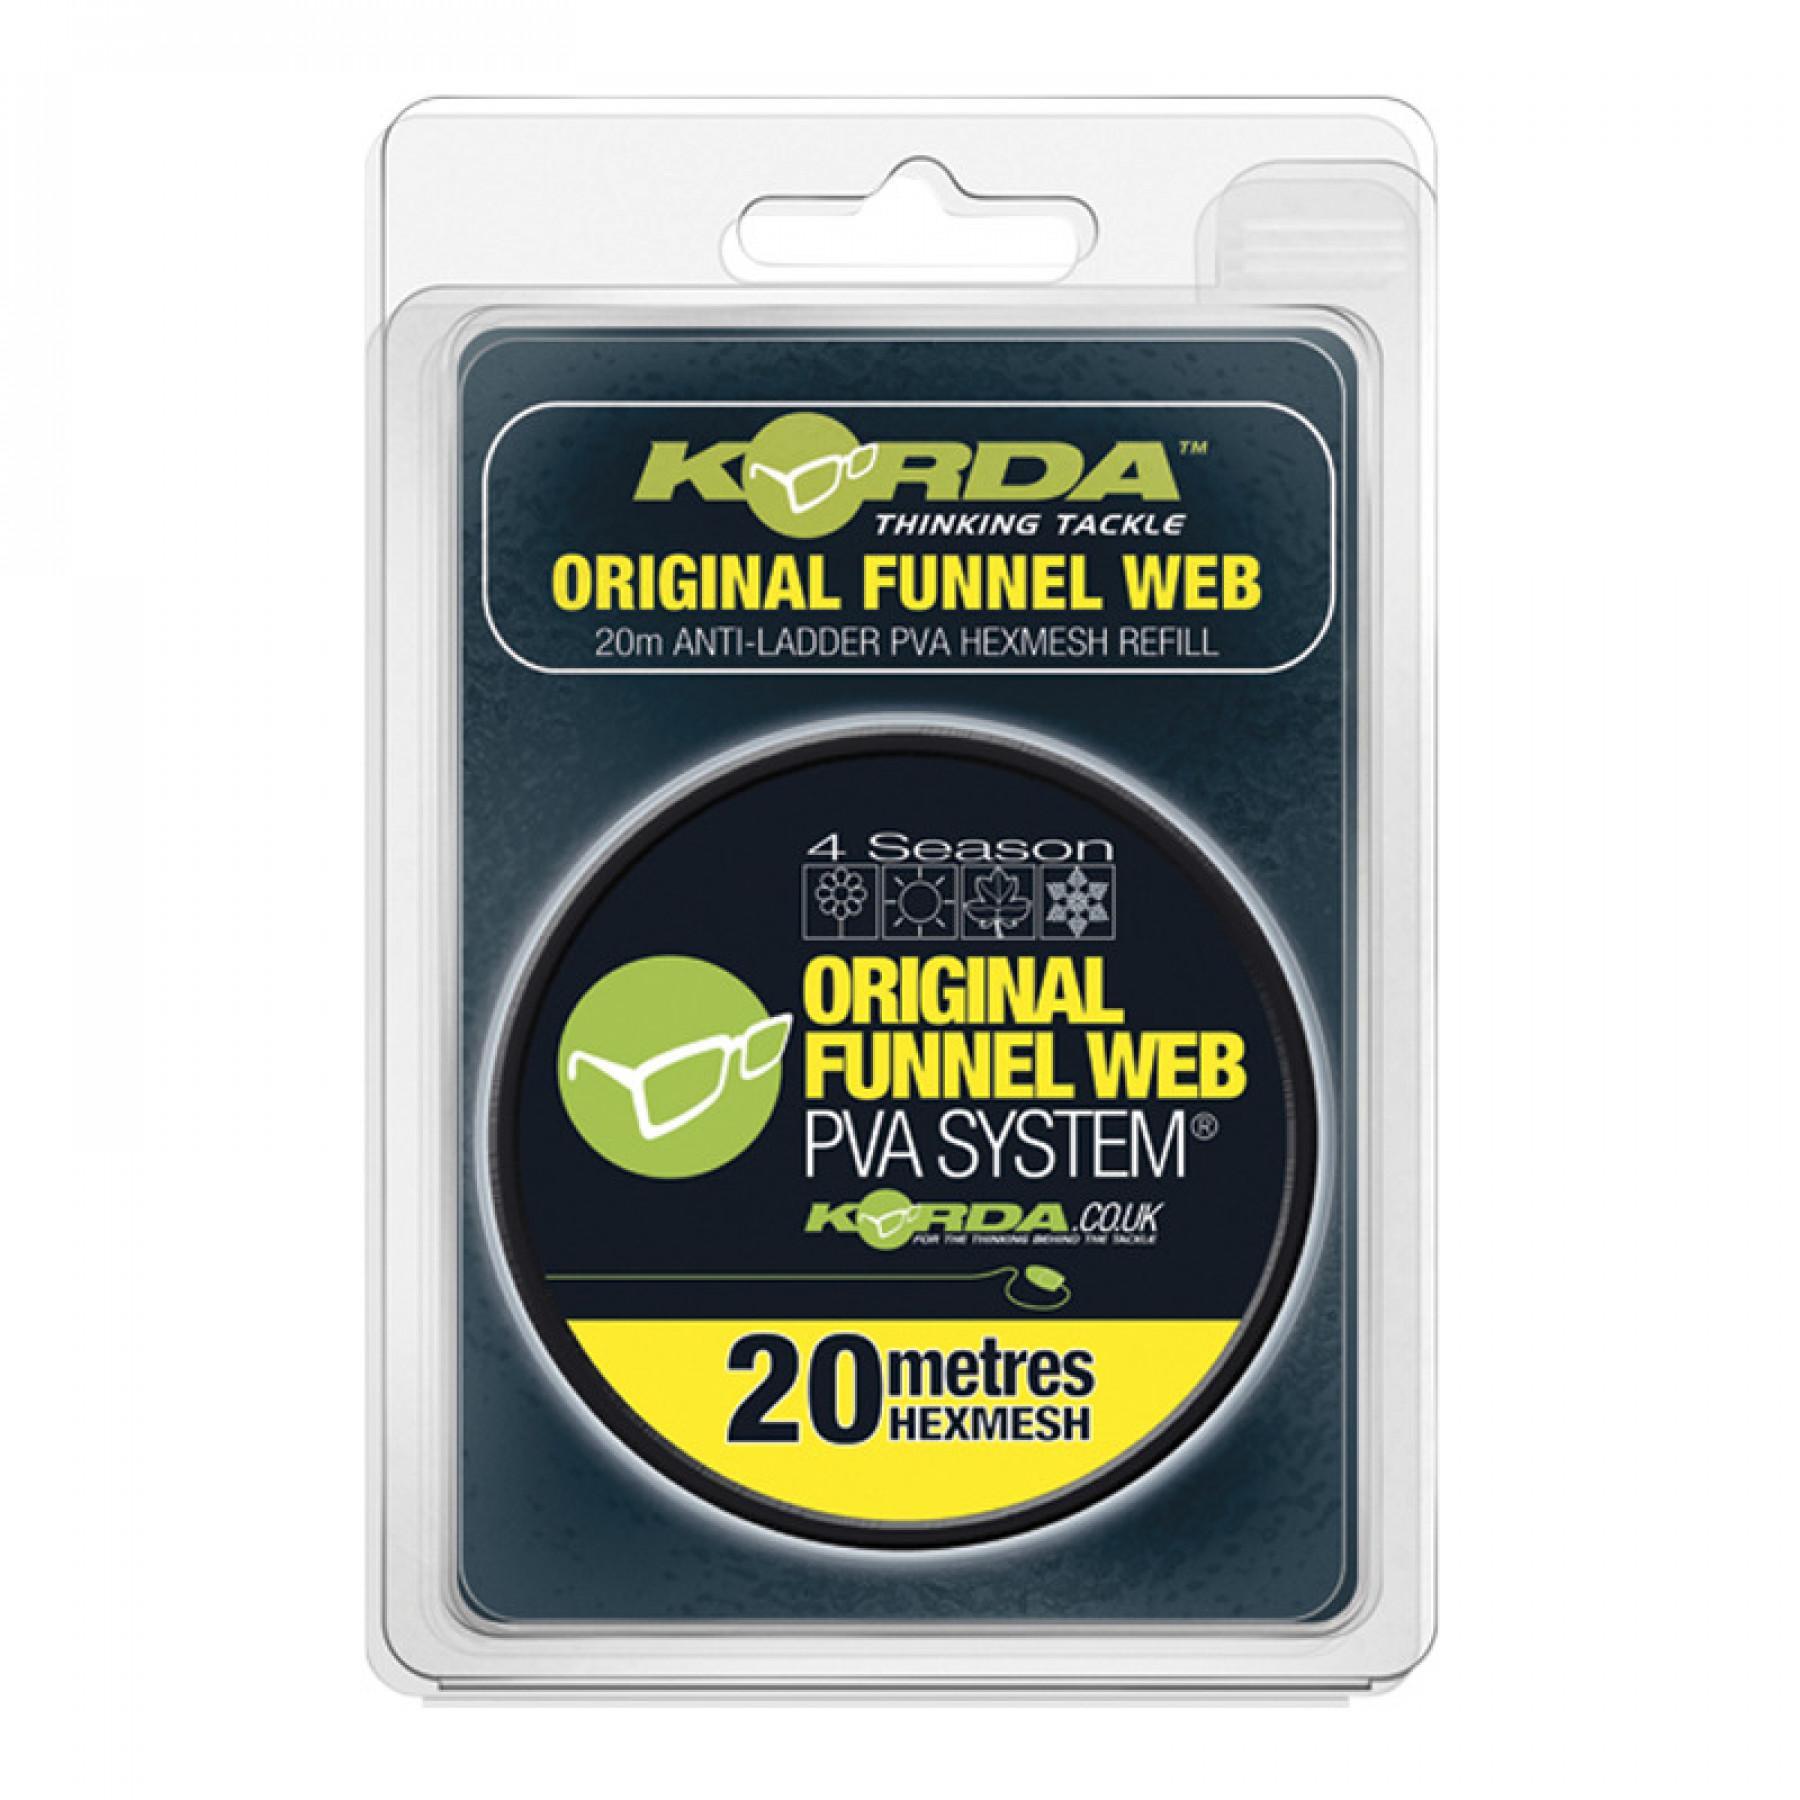 Ricarica tinozze Korda Funnel Web HEXMESH – 20m refill